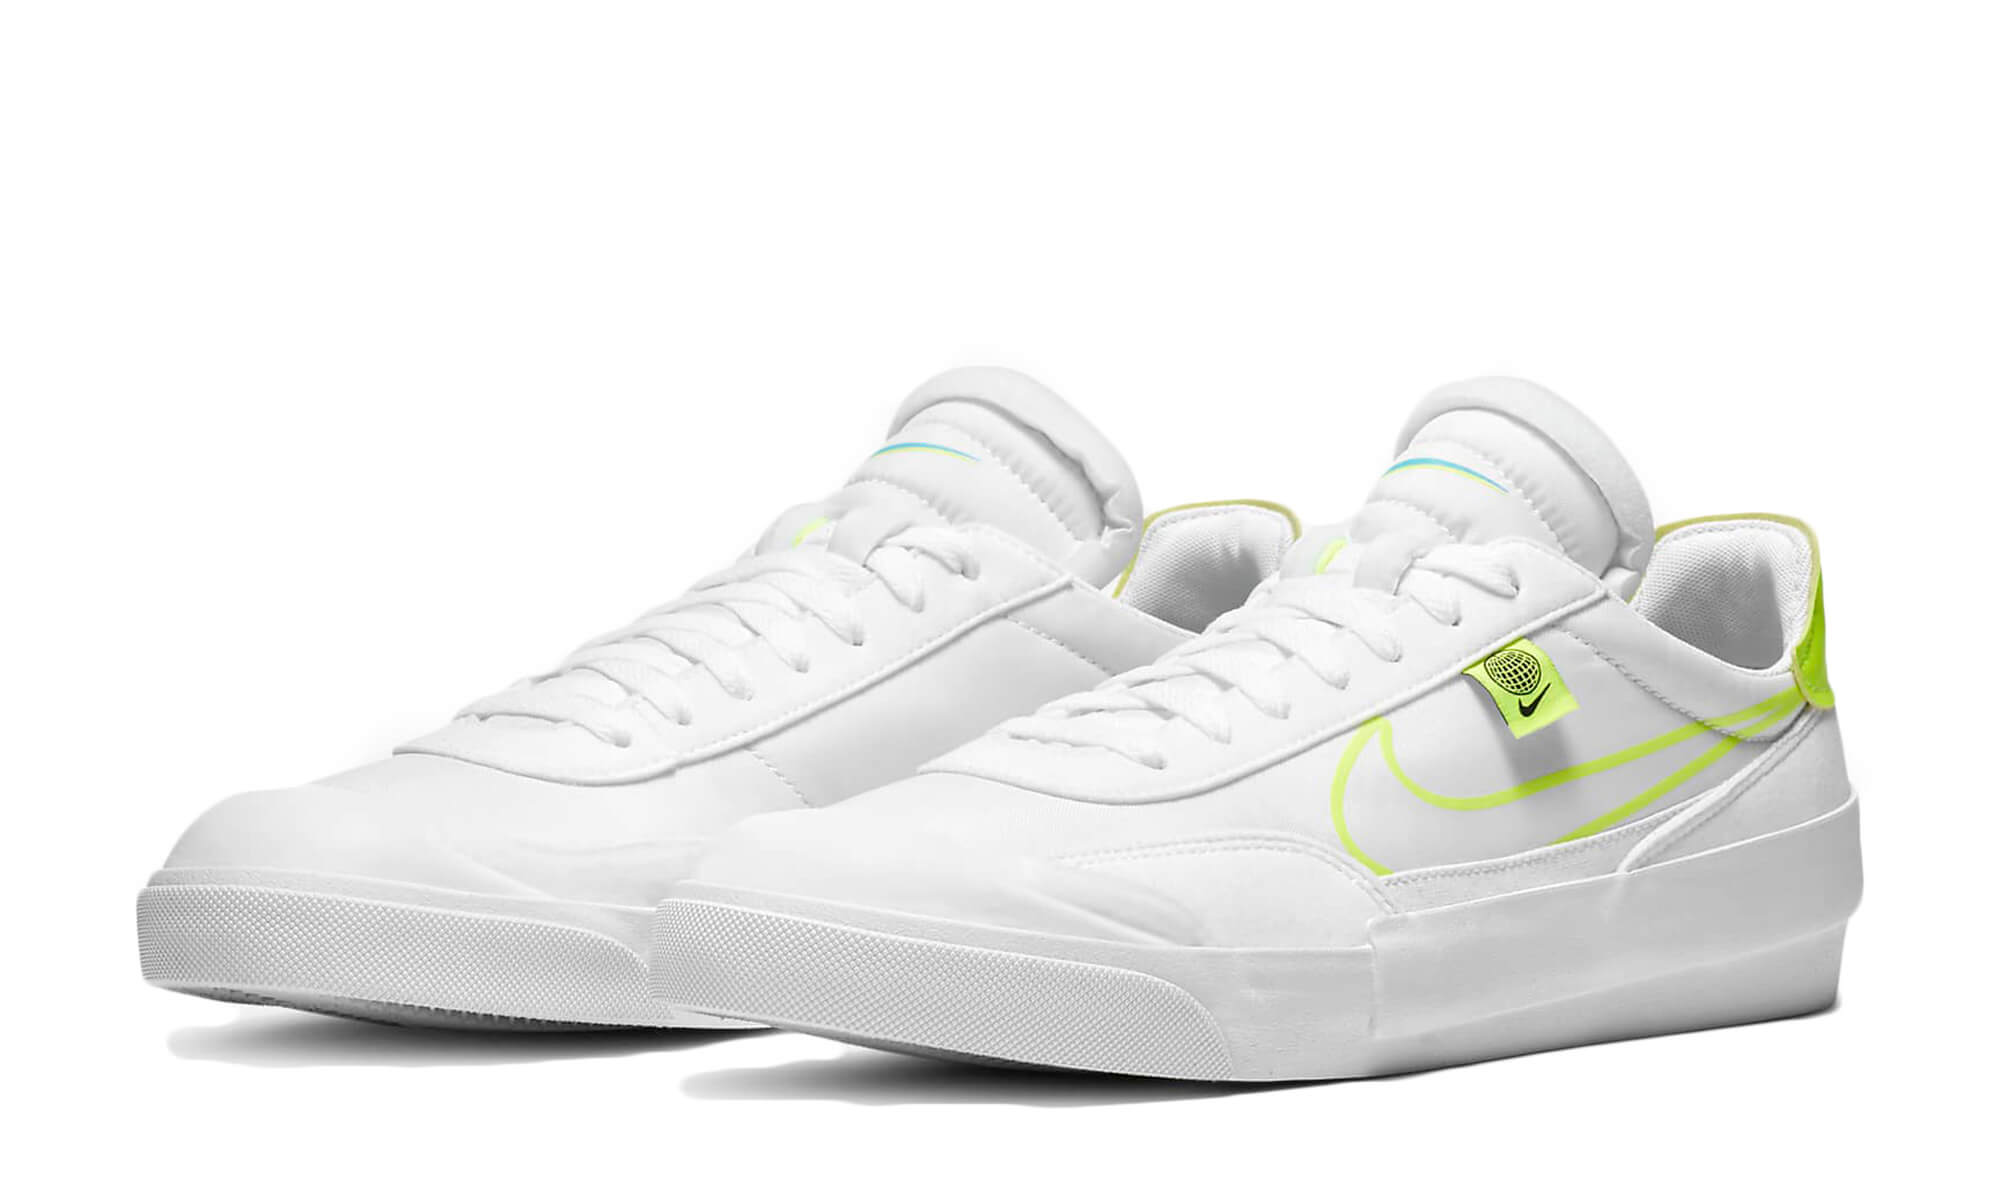 Nike Drop-Type HBR Worldwide 'White/Volt'